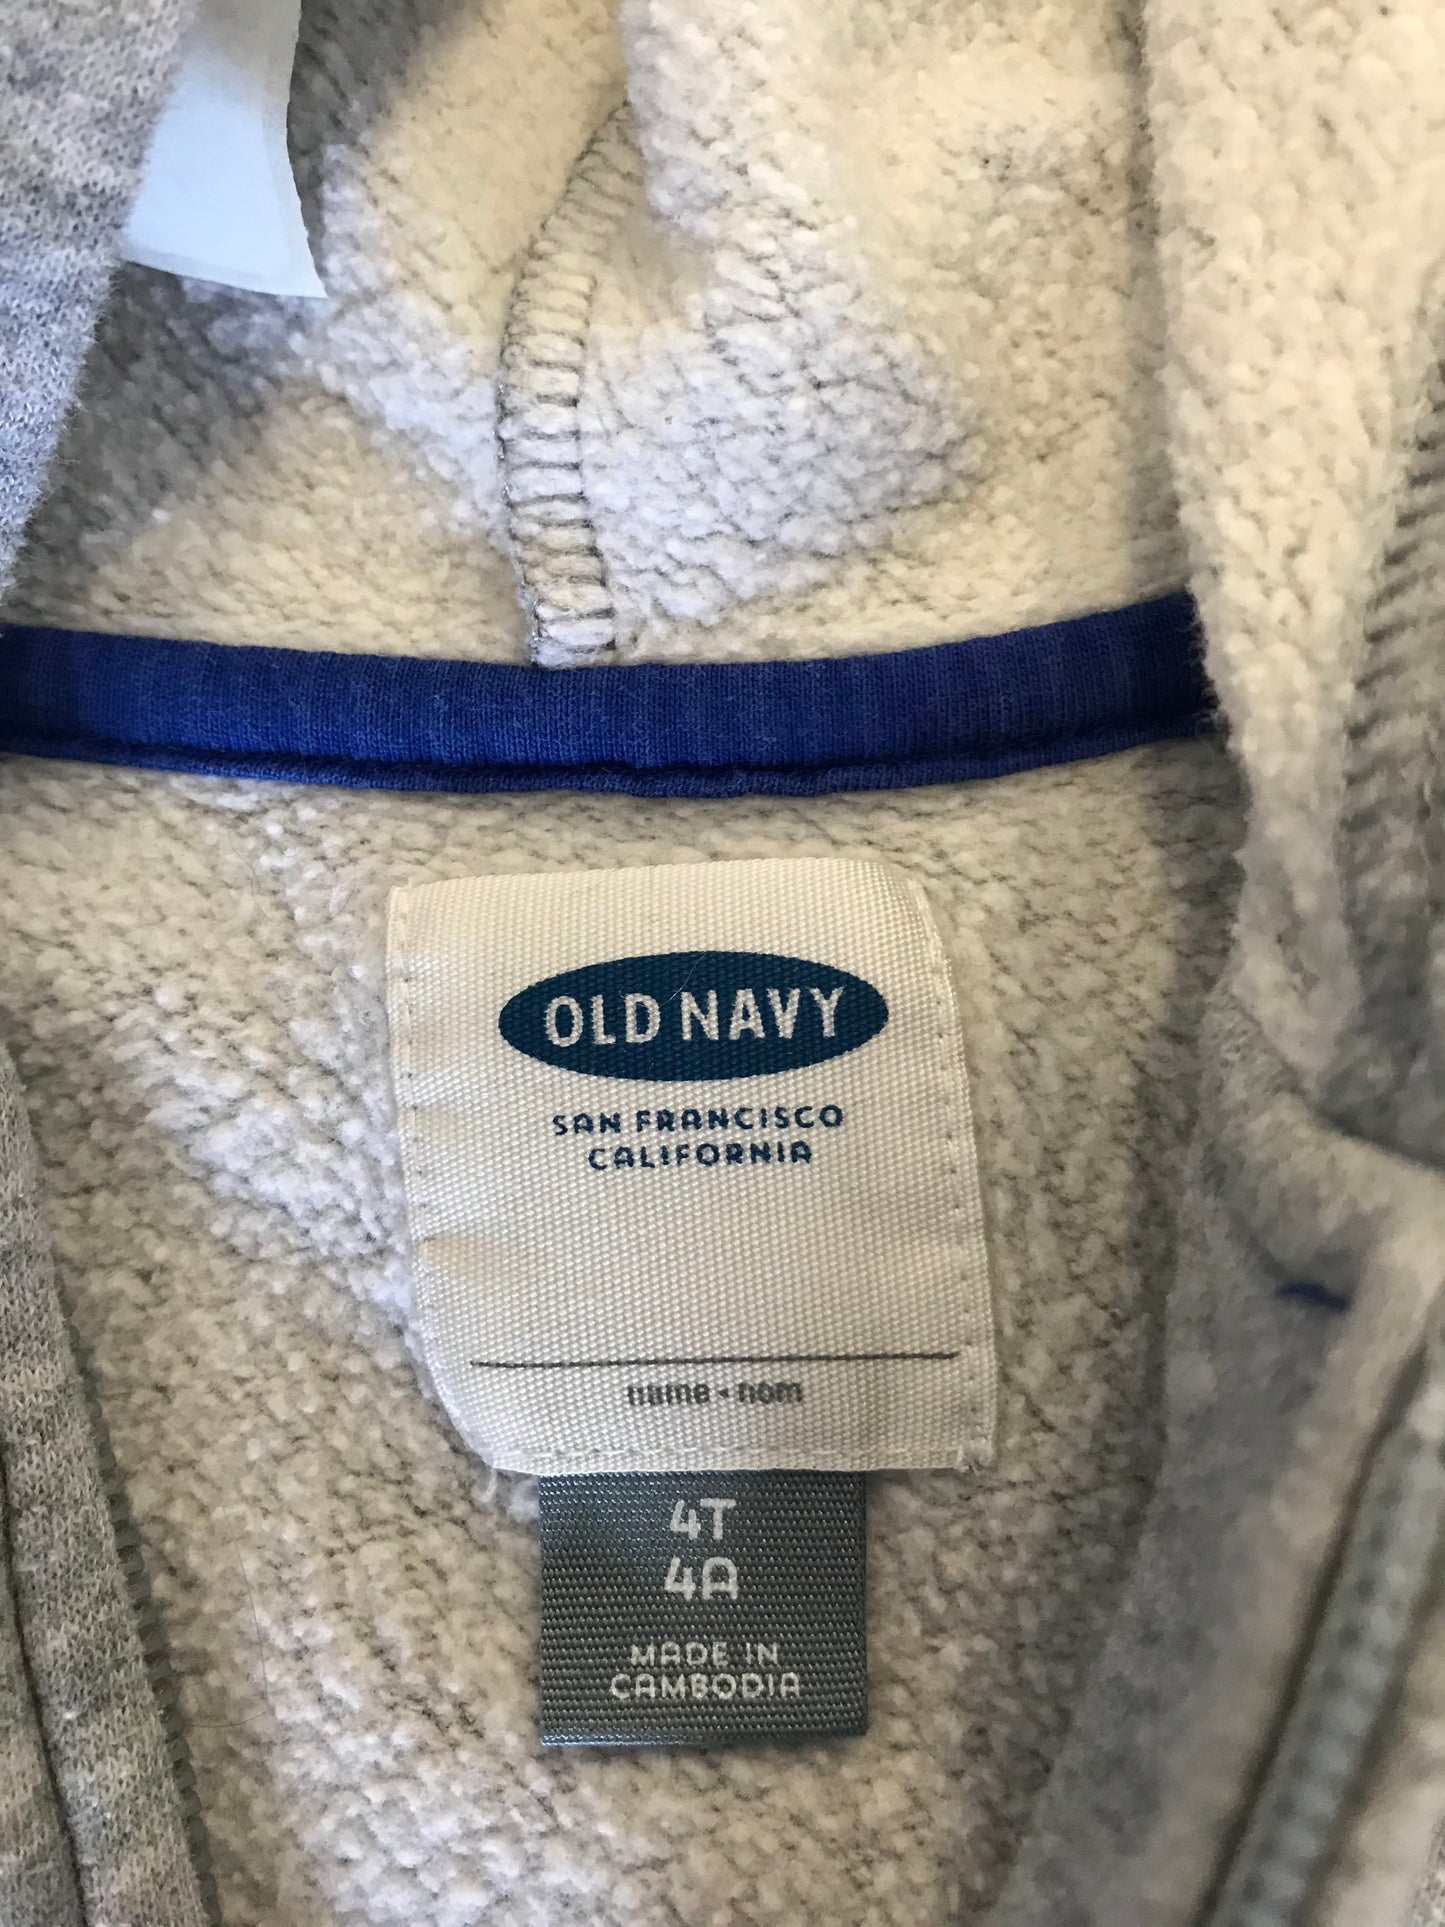 Old Navy zip-up hoodie